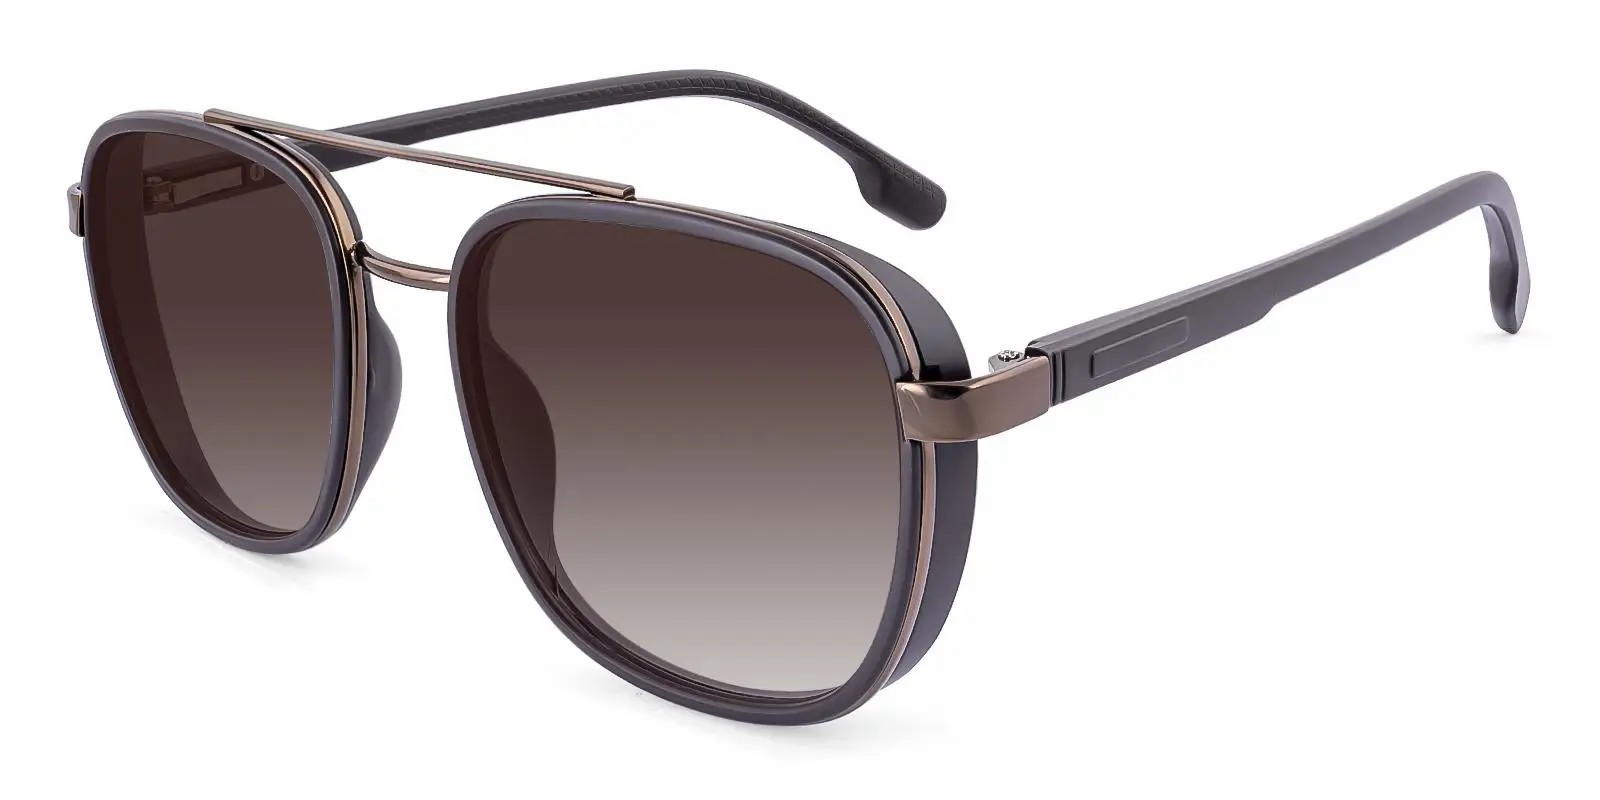 Billige solbriller fra eo Selection - Dymo - Brun